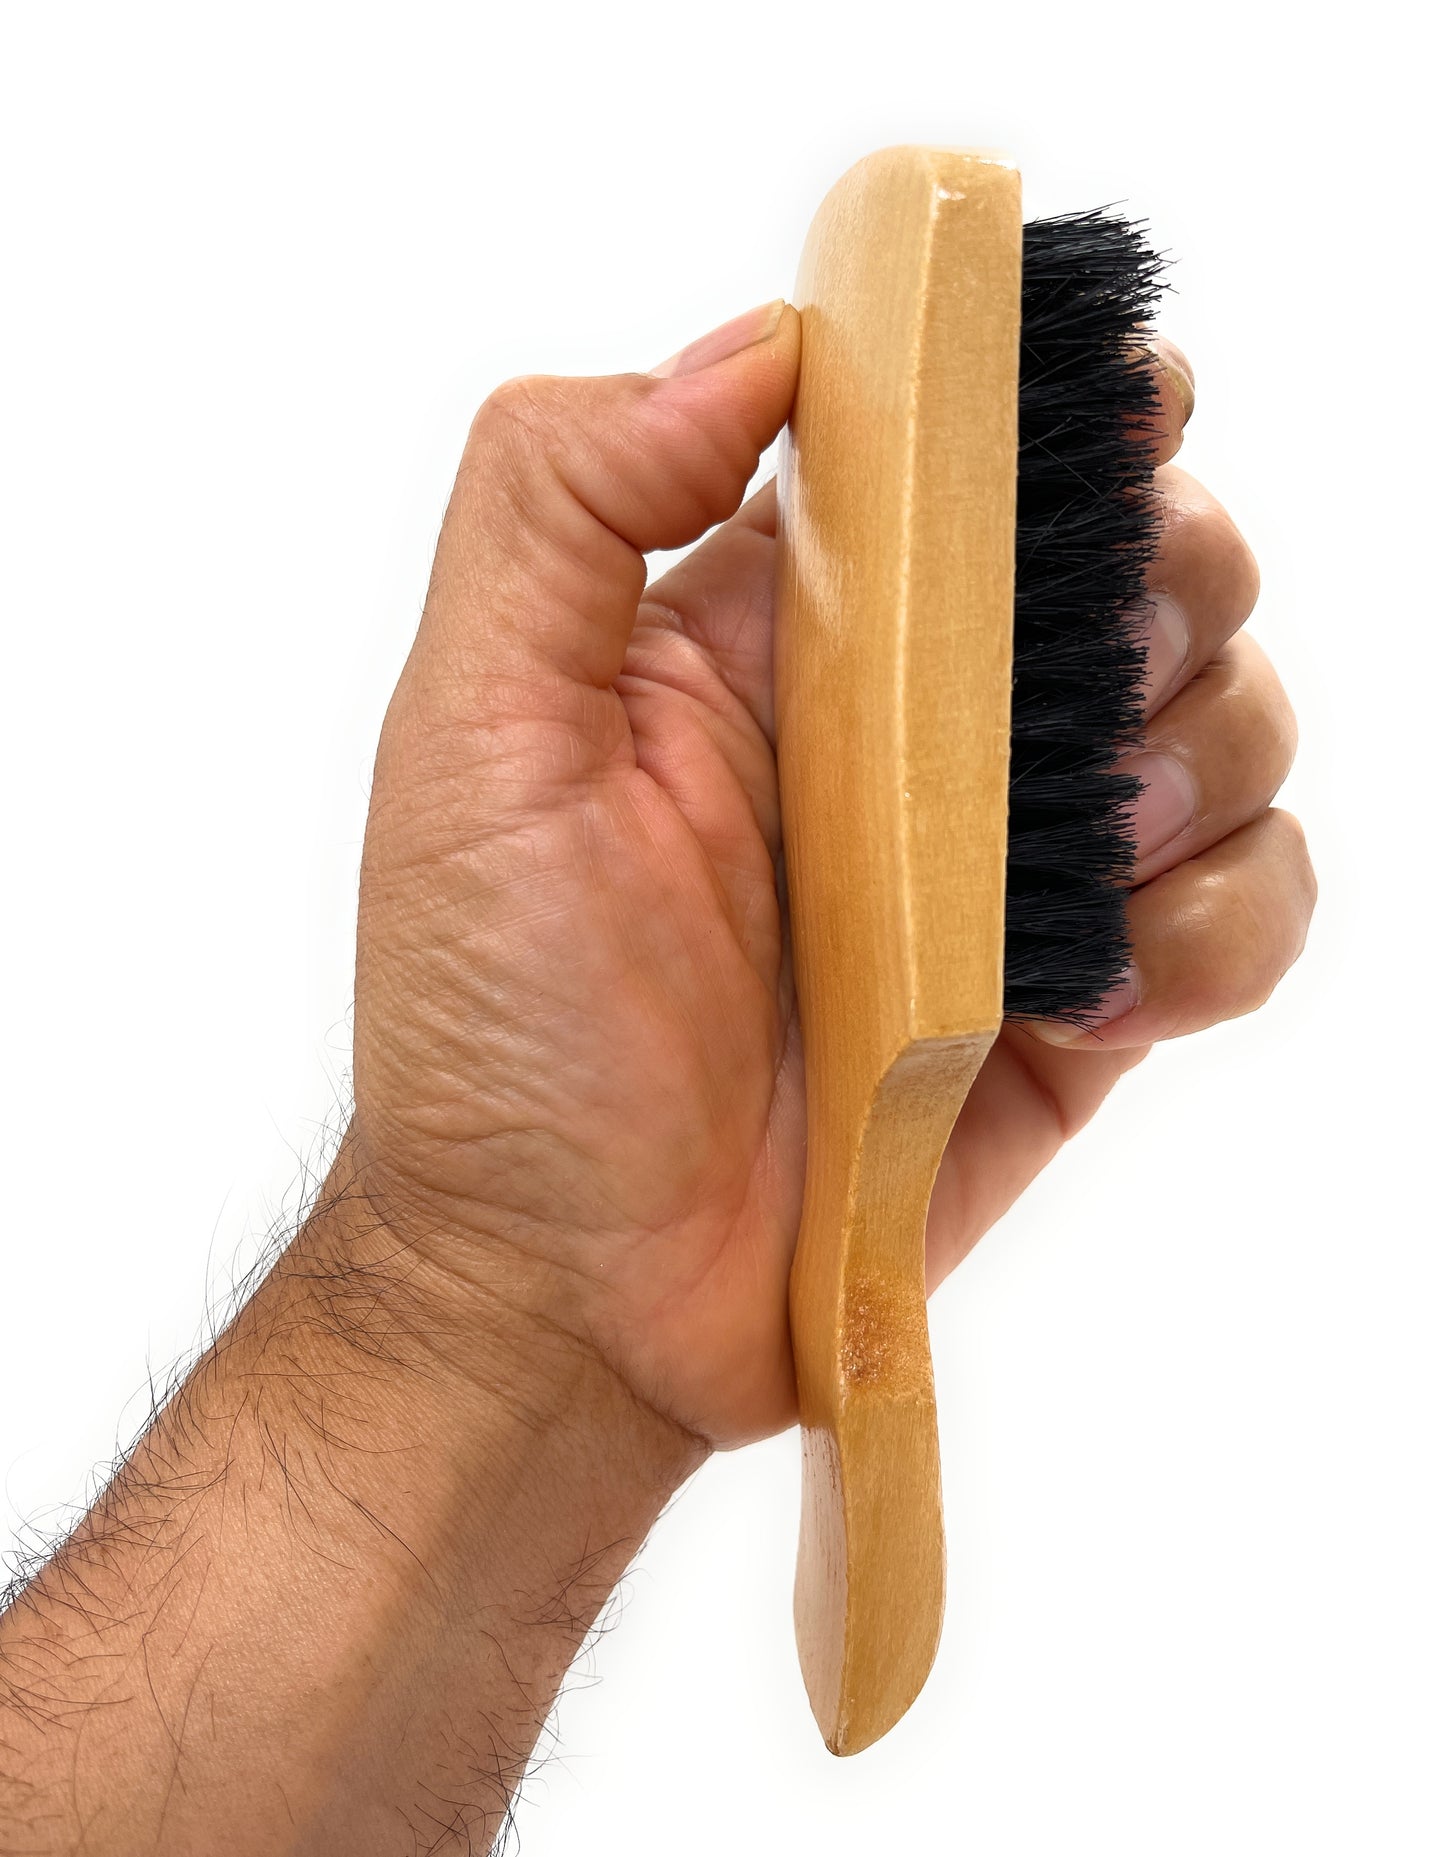 Phillips Brush #330 Club Brush 100% Pure Bristle 7 Rows Wooden Handle